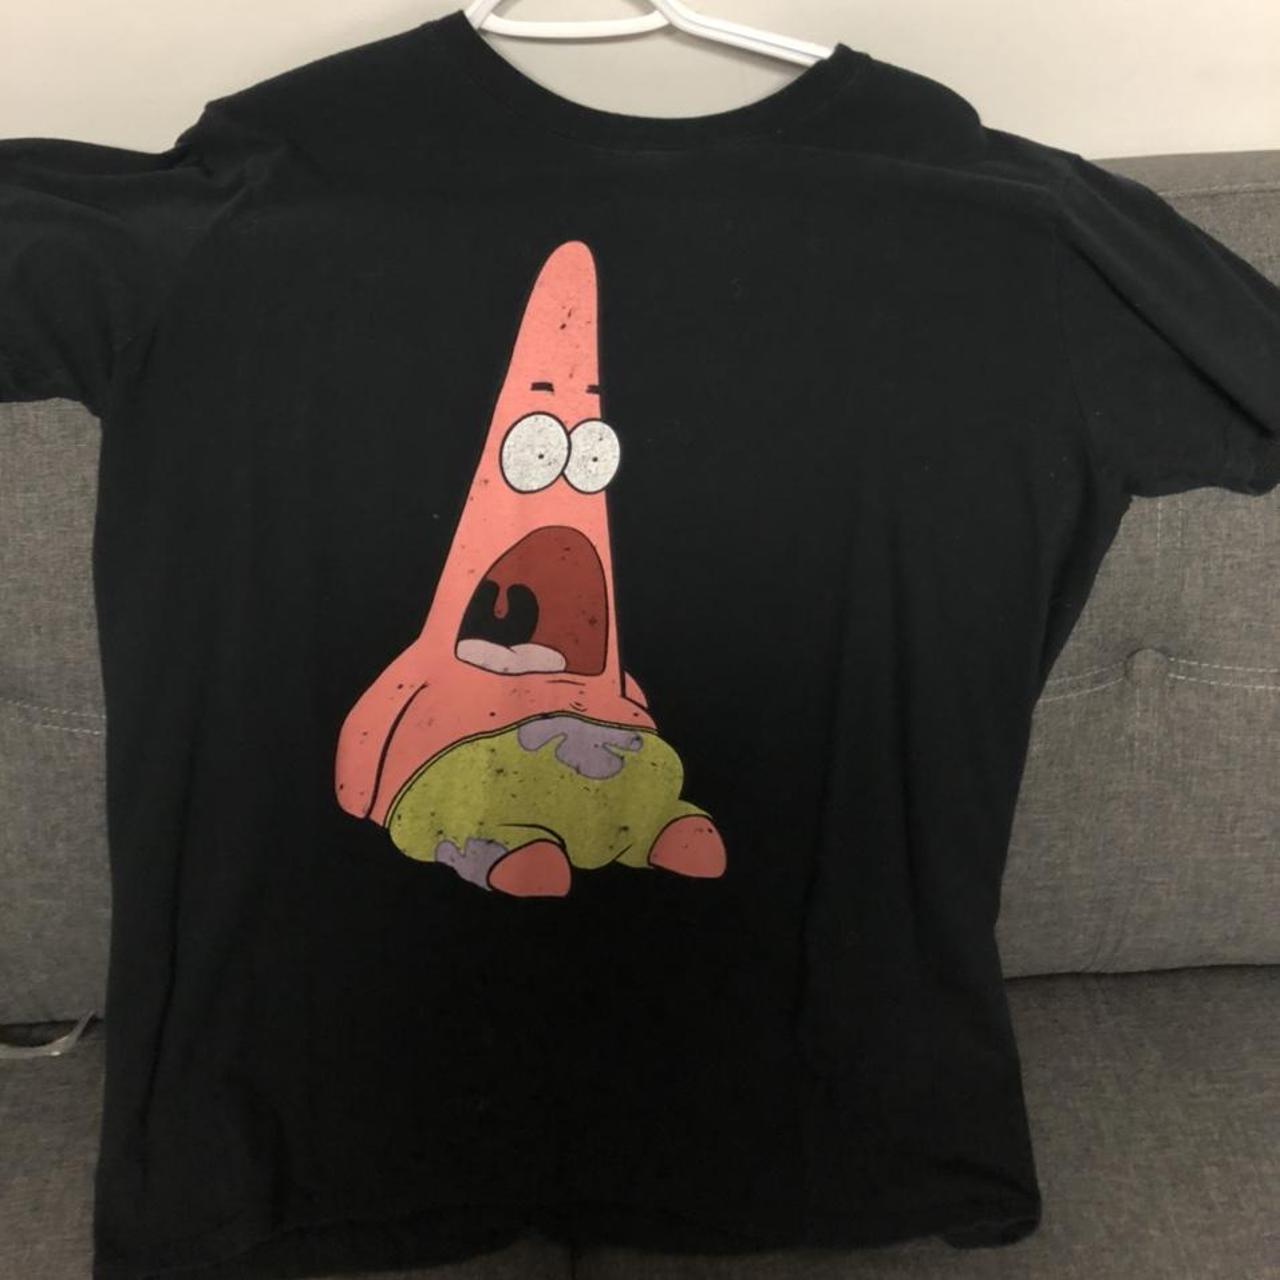 Patrick oversized shirt, worn a couple times but has... - Depop